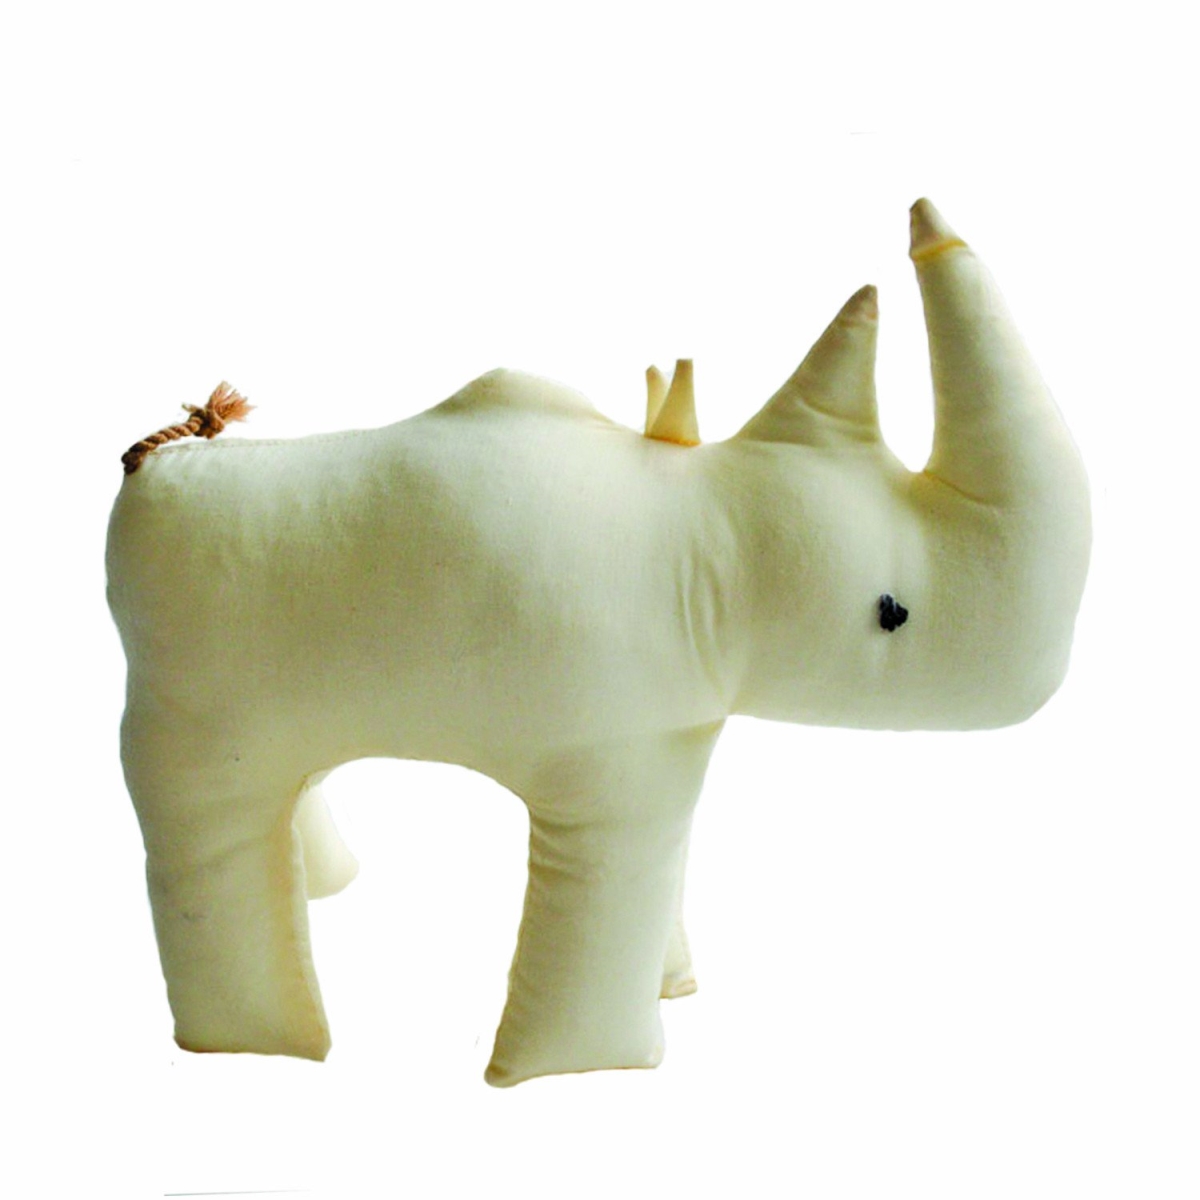 Im156020rh-596103 Handmade & Fair Trade Safari Stuffed Animal Large Rhino